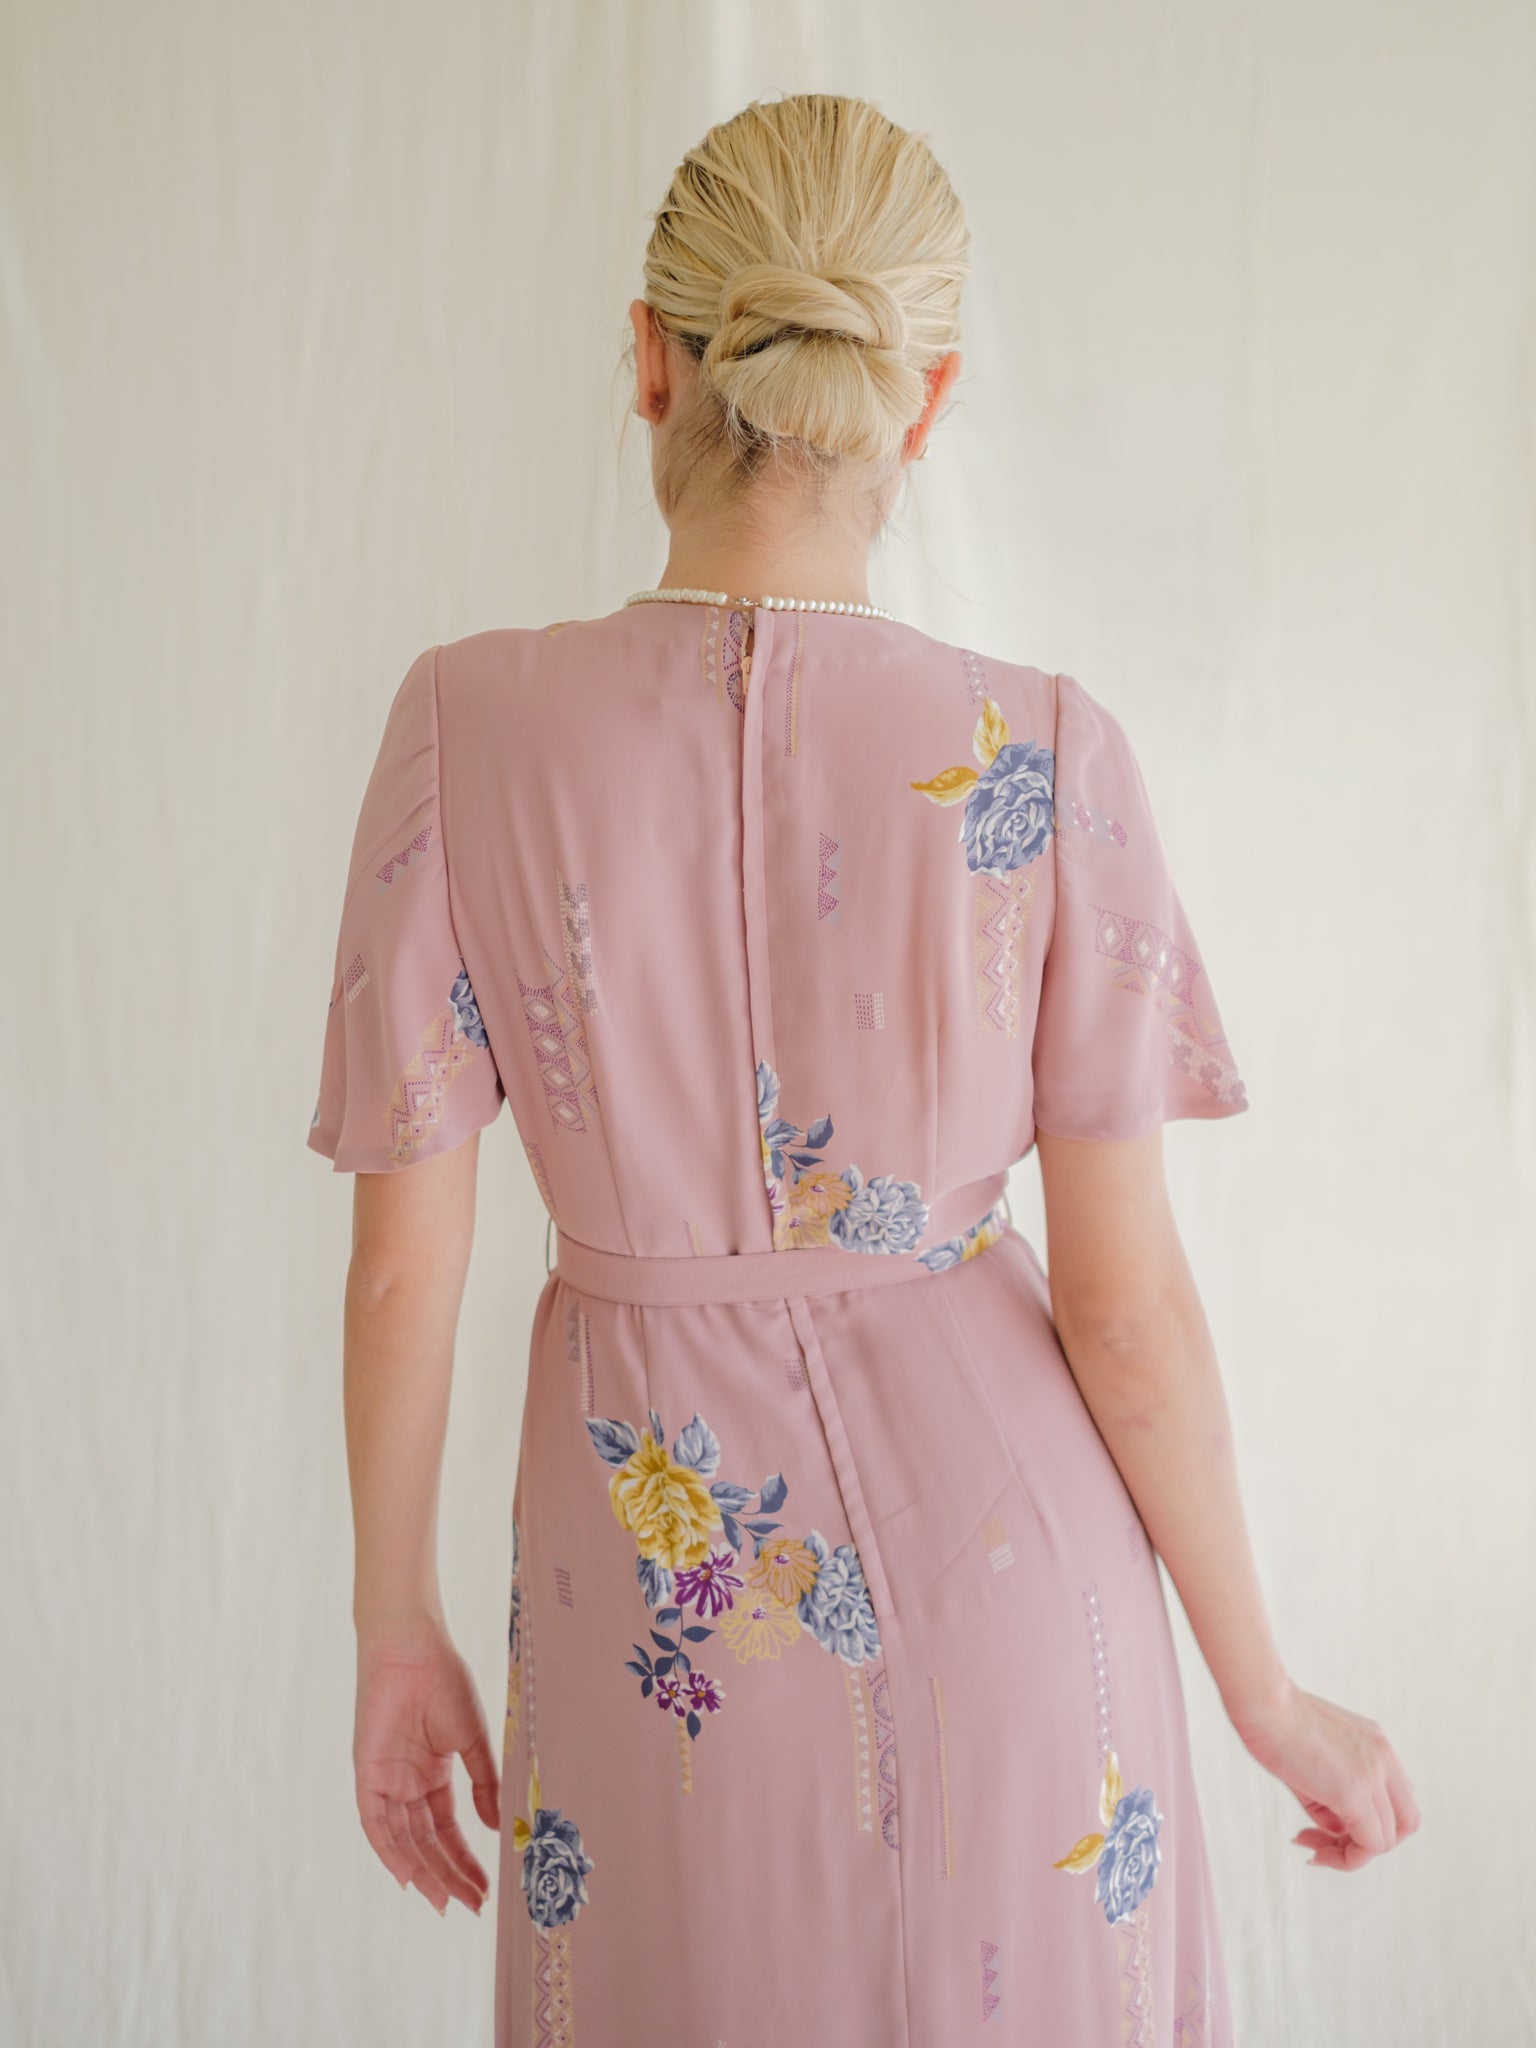 Pink floral chiffon vintage dress